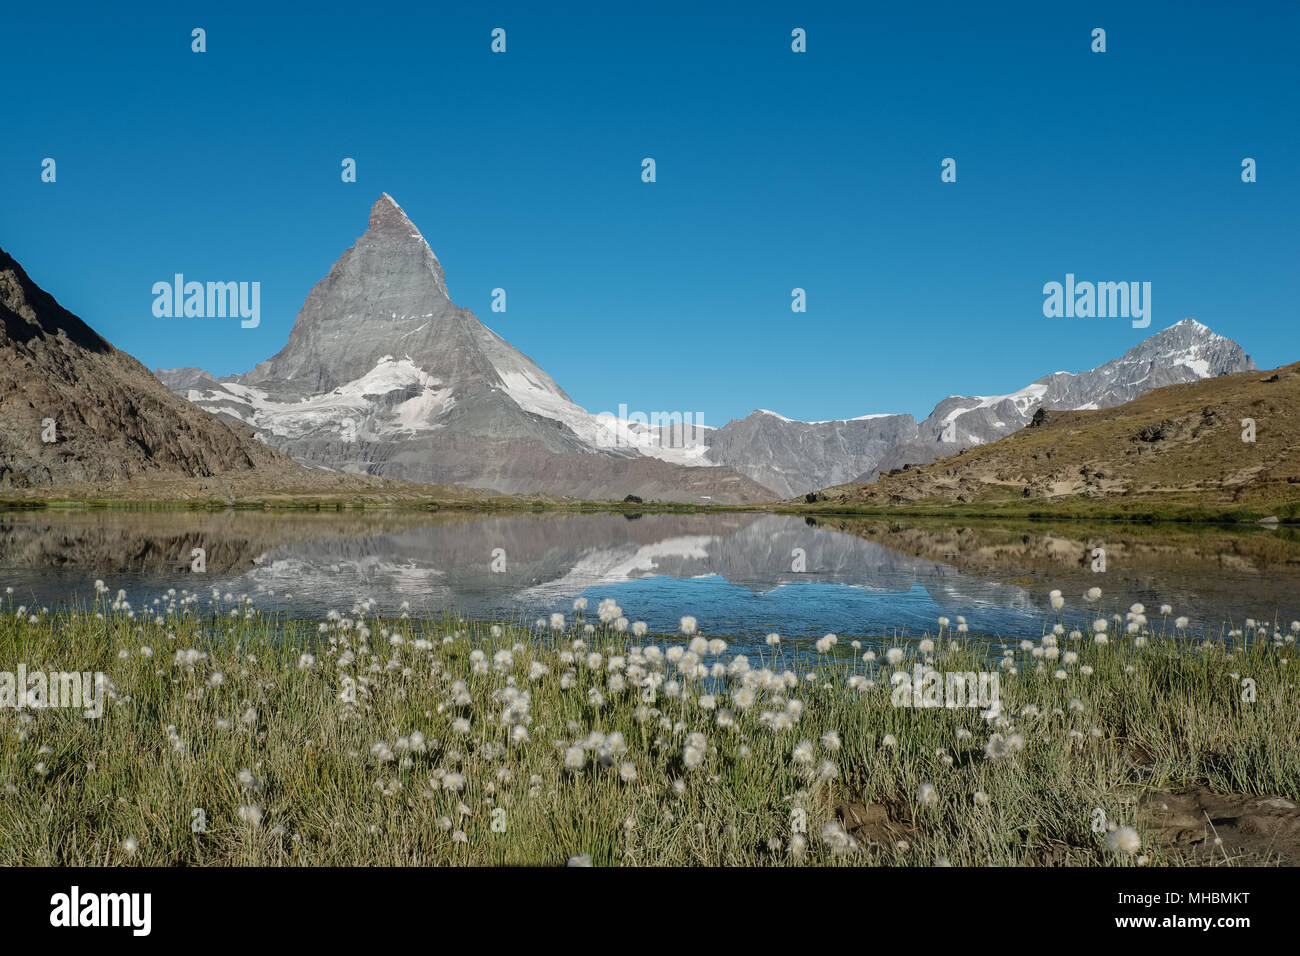 View on cotton grass and Matterhorn reflected in Lake  Riffelsee near Zermatt, Switzerland. Stock Photo